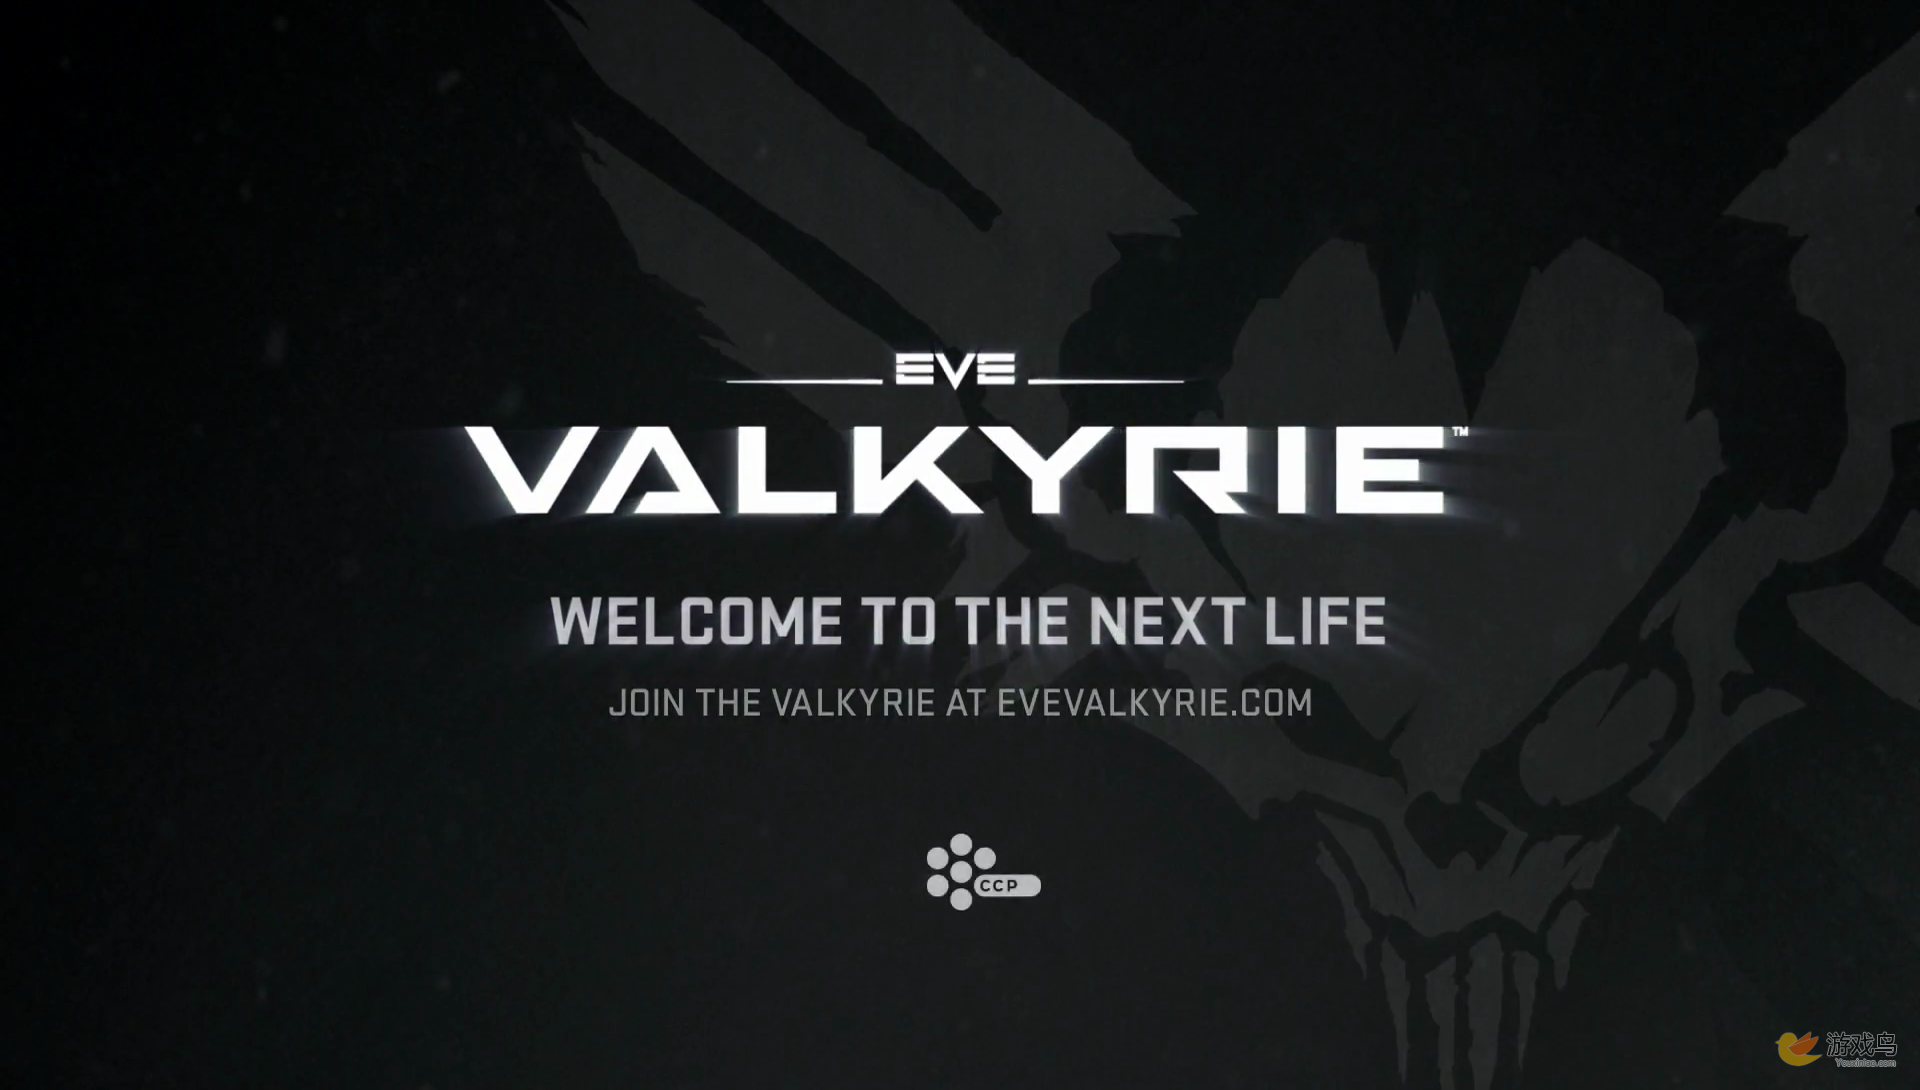 VR射击游戏《EVE 瓦尔基里》最新宣传视频曝光图片1